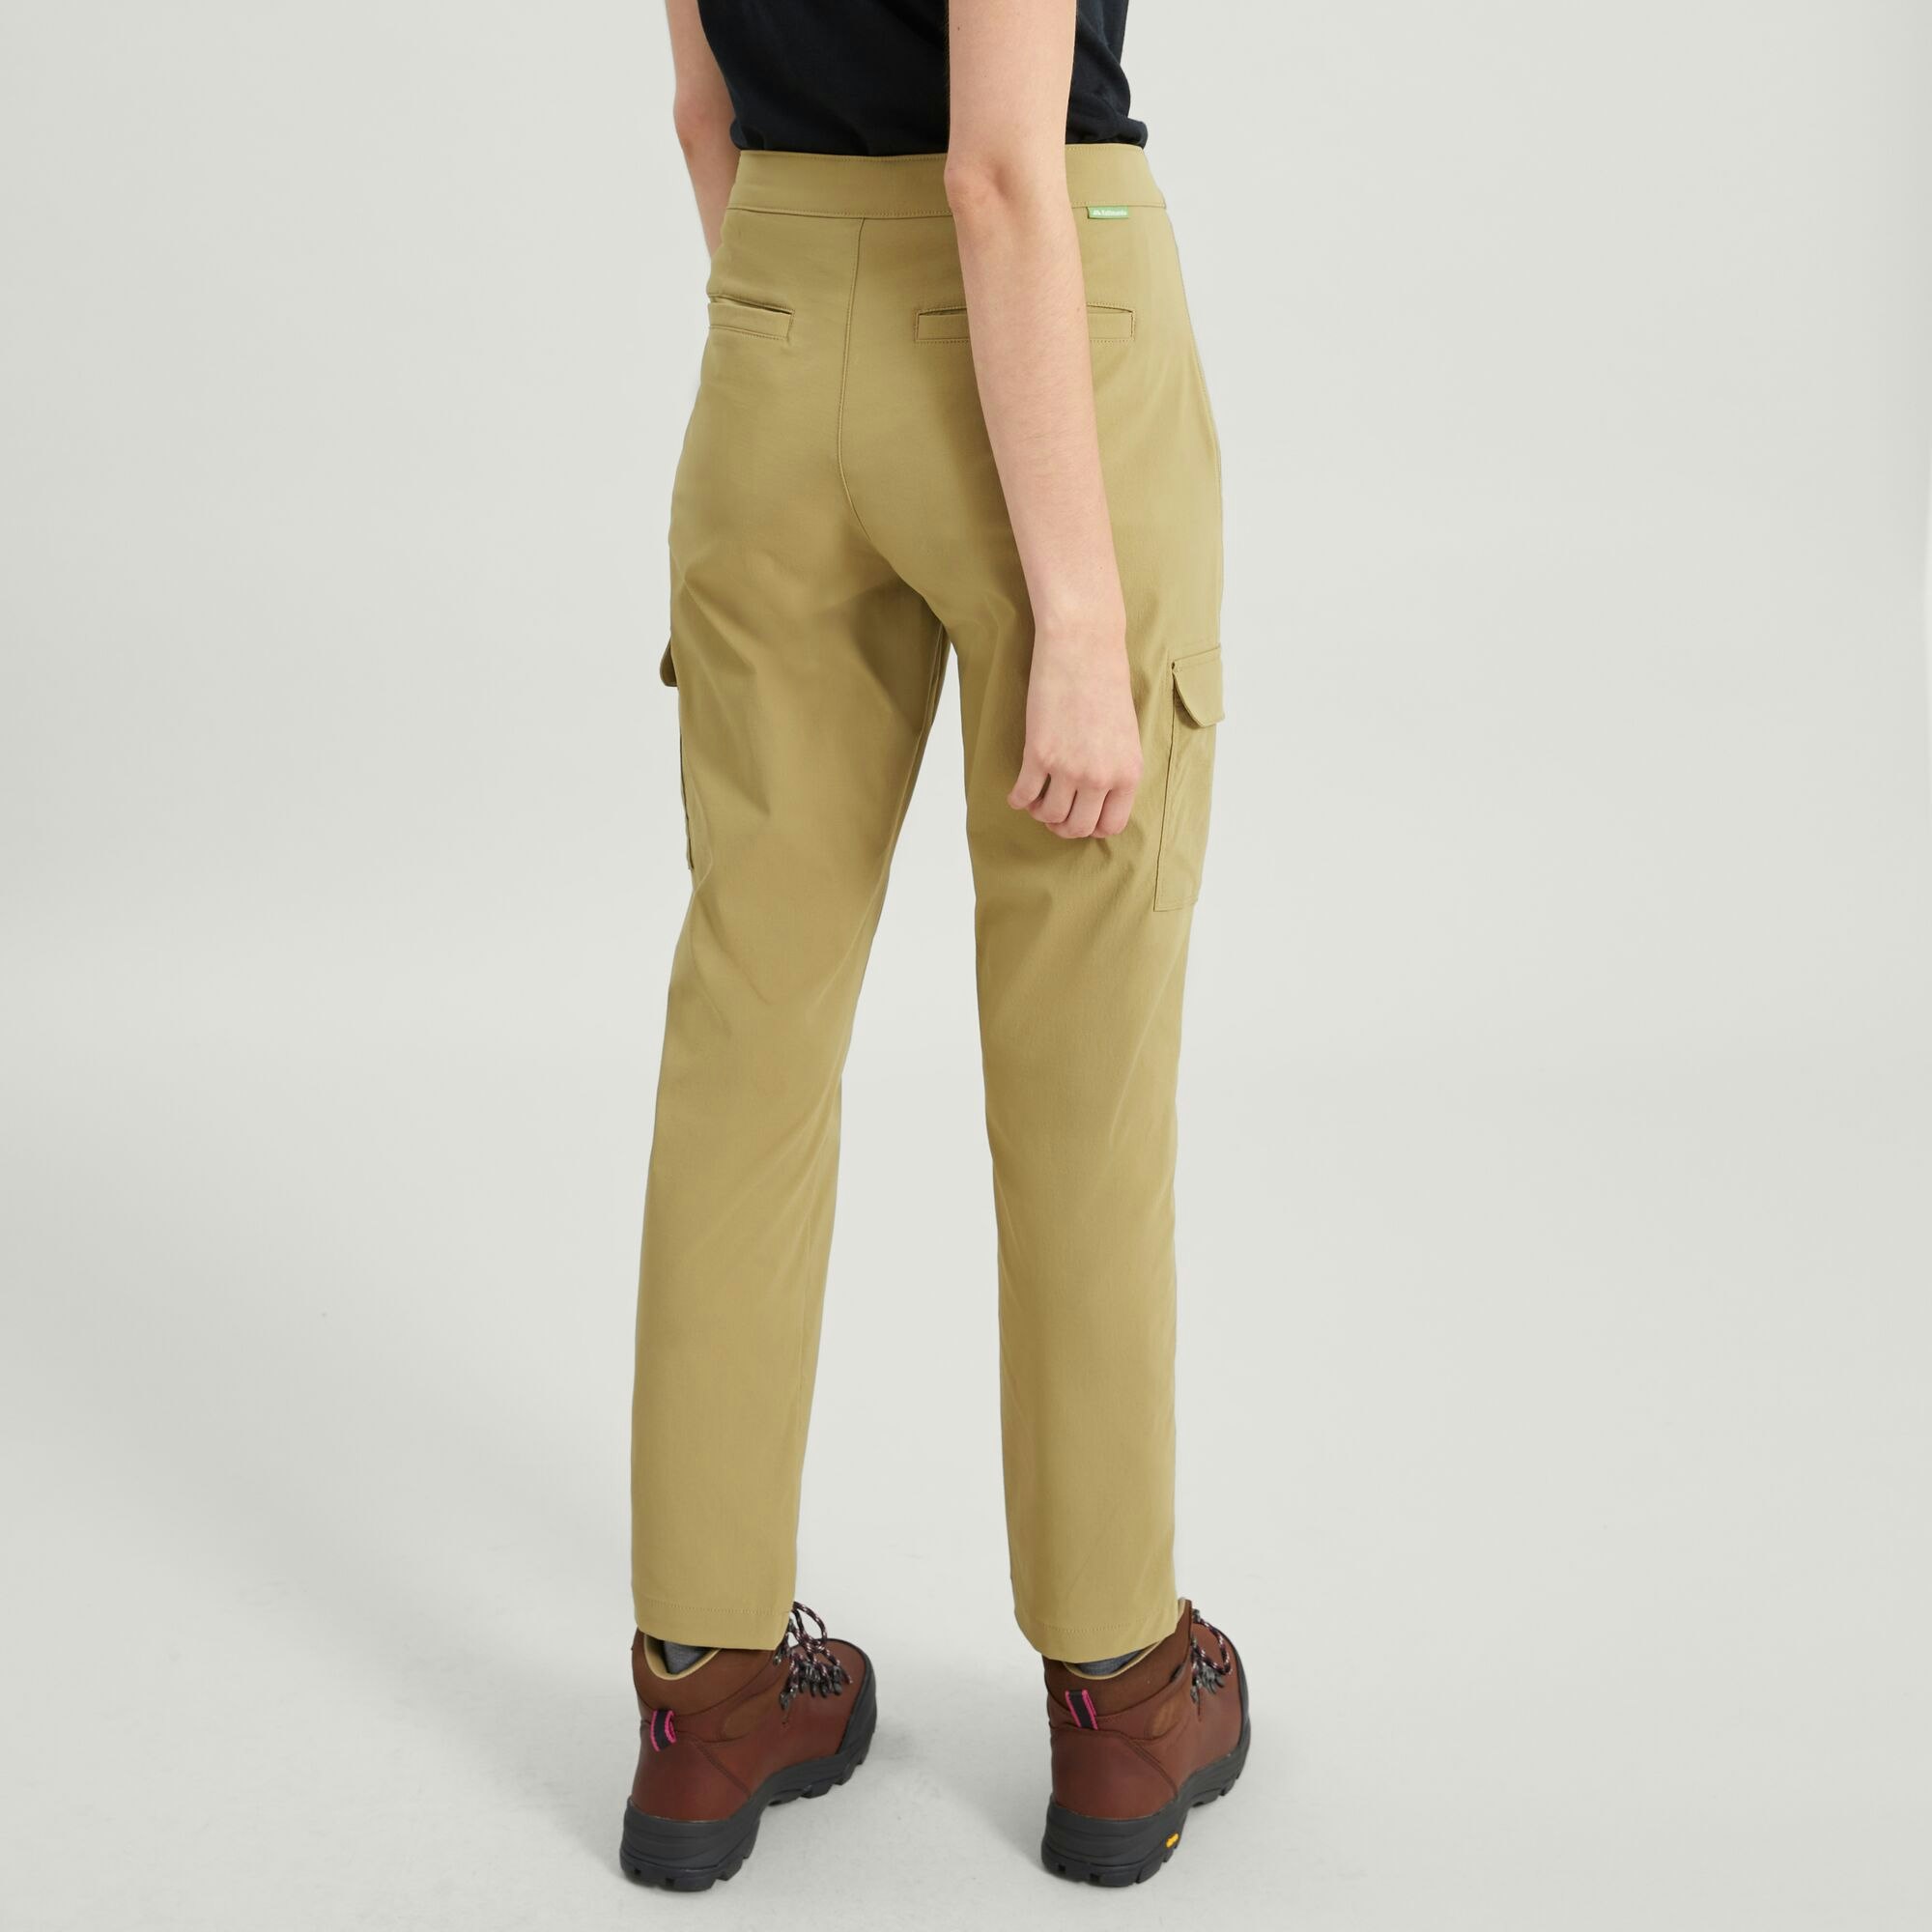 Kathmandu UltraCore Thermal Womens Pants 2 x size 12, Pants & Jeans, Gumtree Australia Gold Coast South - Varsity Lakes